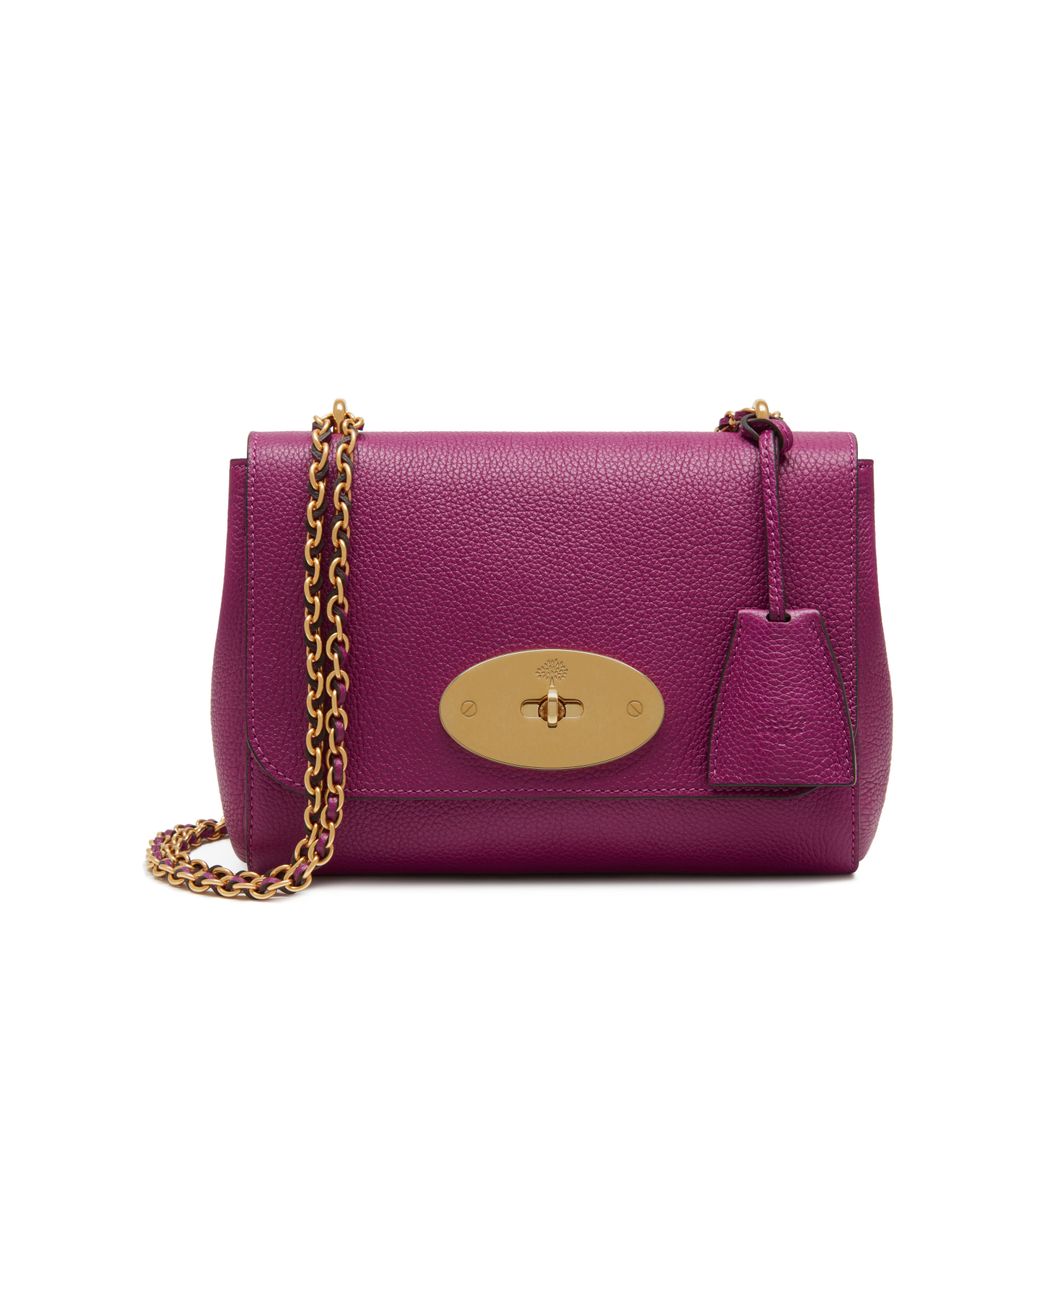 Vera Bradley Purse Shoulder Bag Mulberry Purple Plum Quilted | eBay